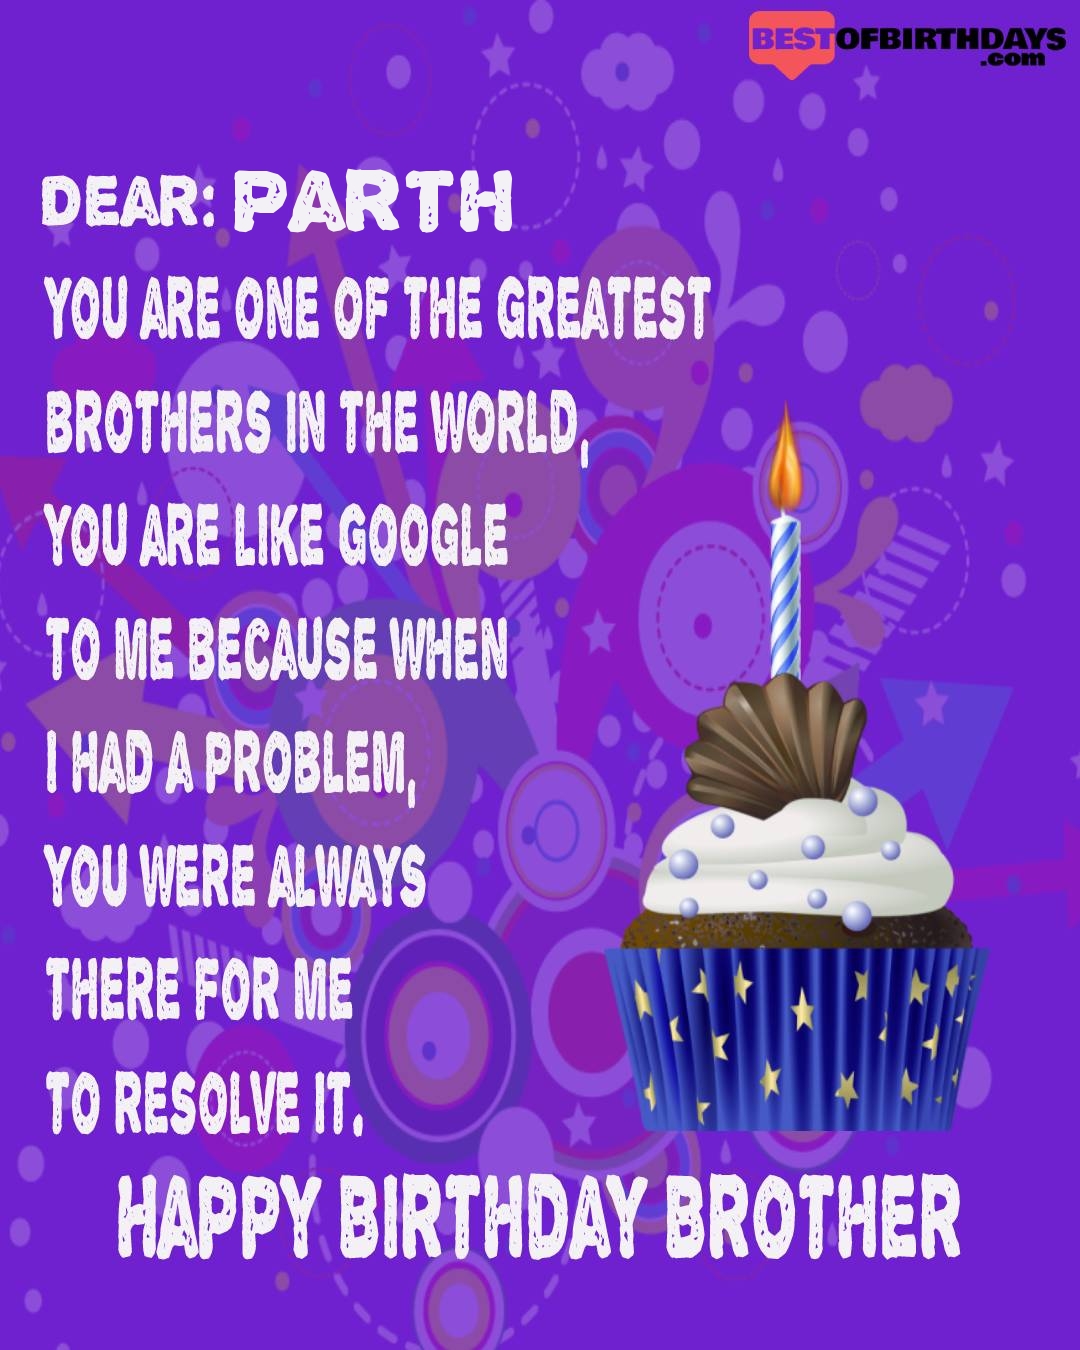 Happy birthday parth bhai brother bro